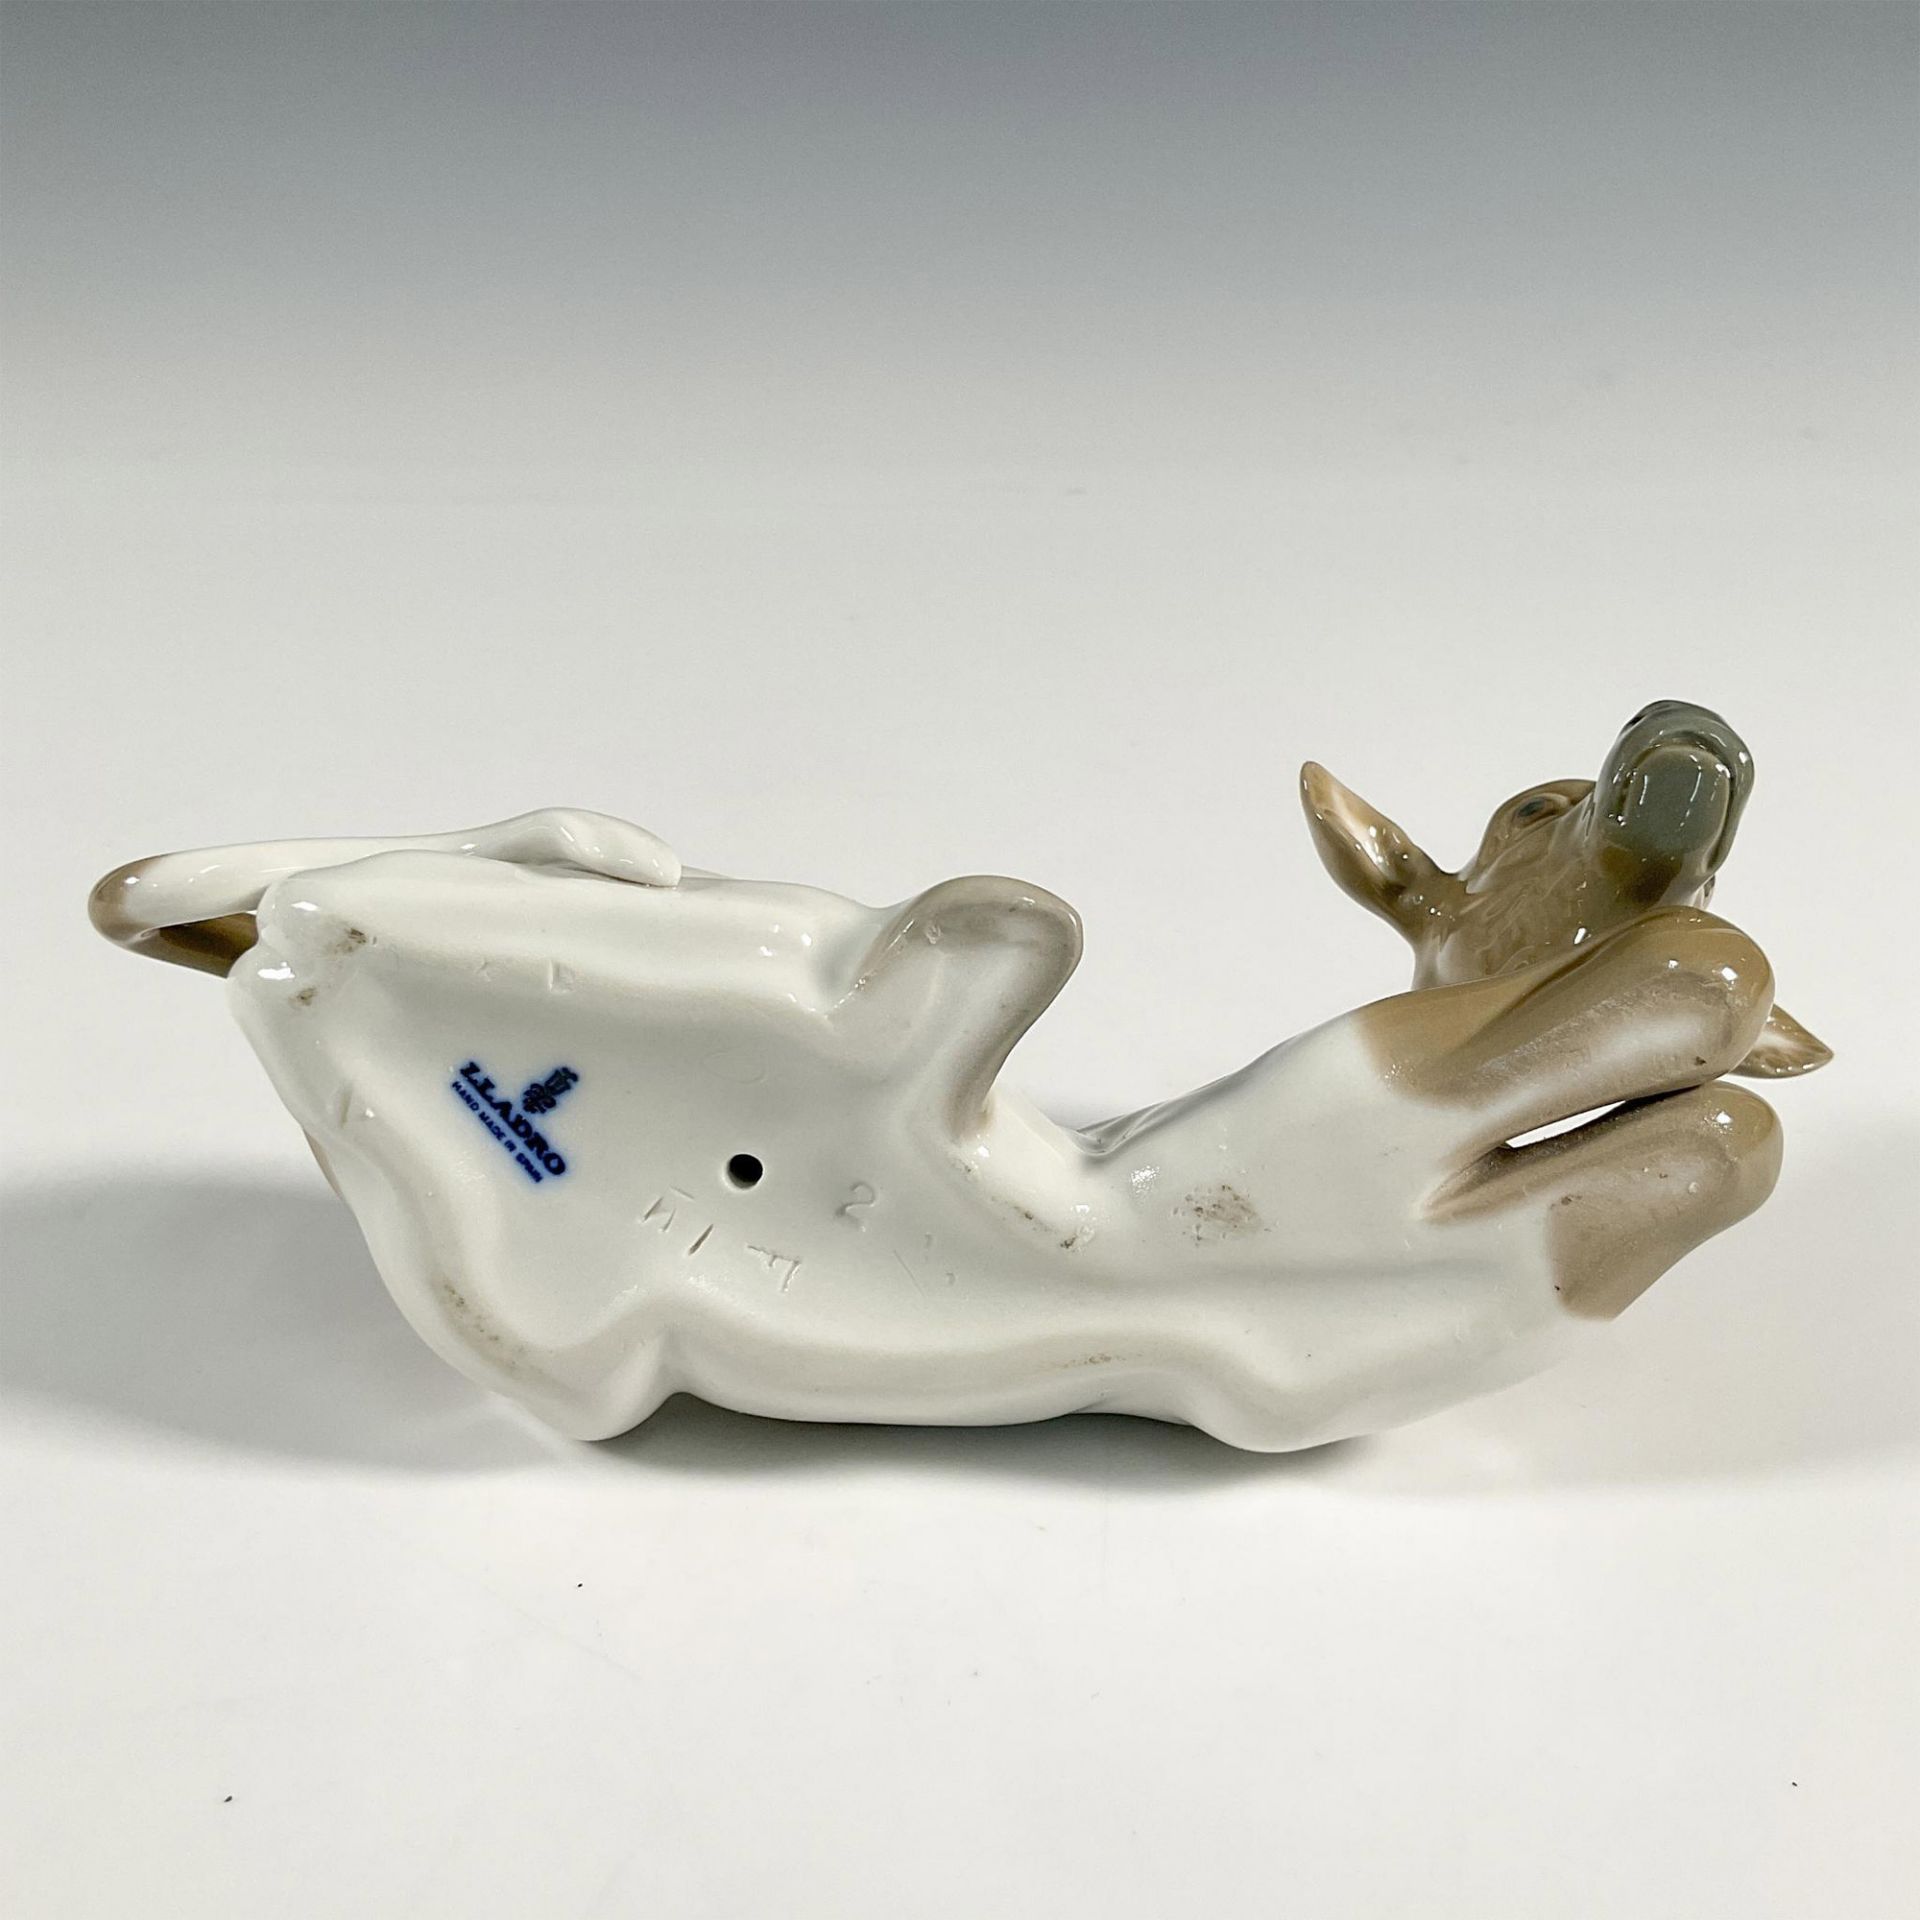 Cow 1004680 - Lladro Porcelain Figurine - Image 3 of 4